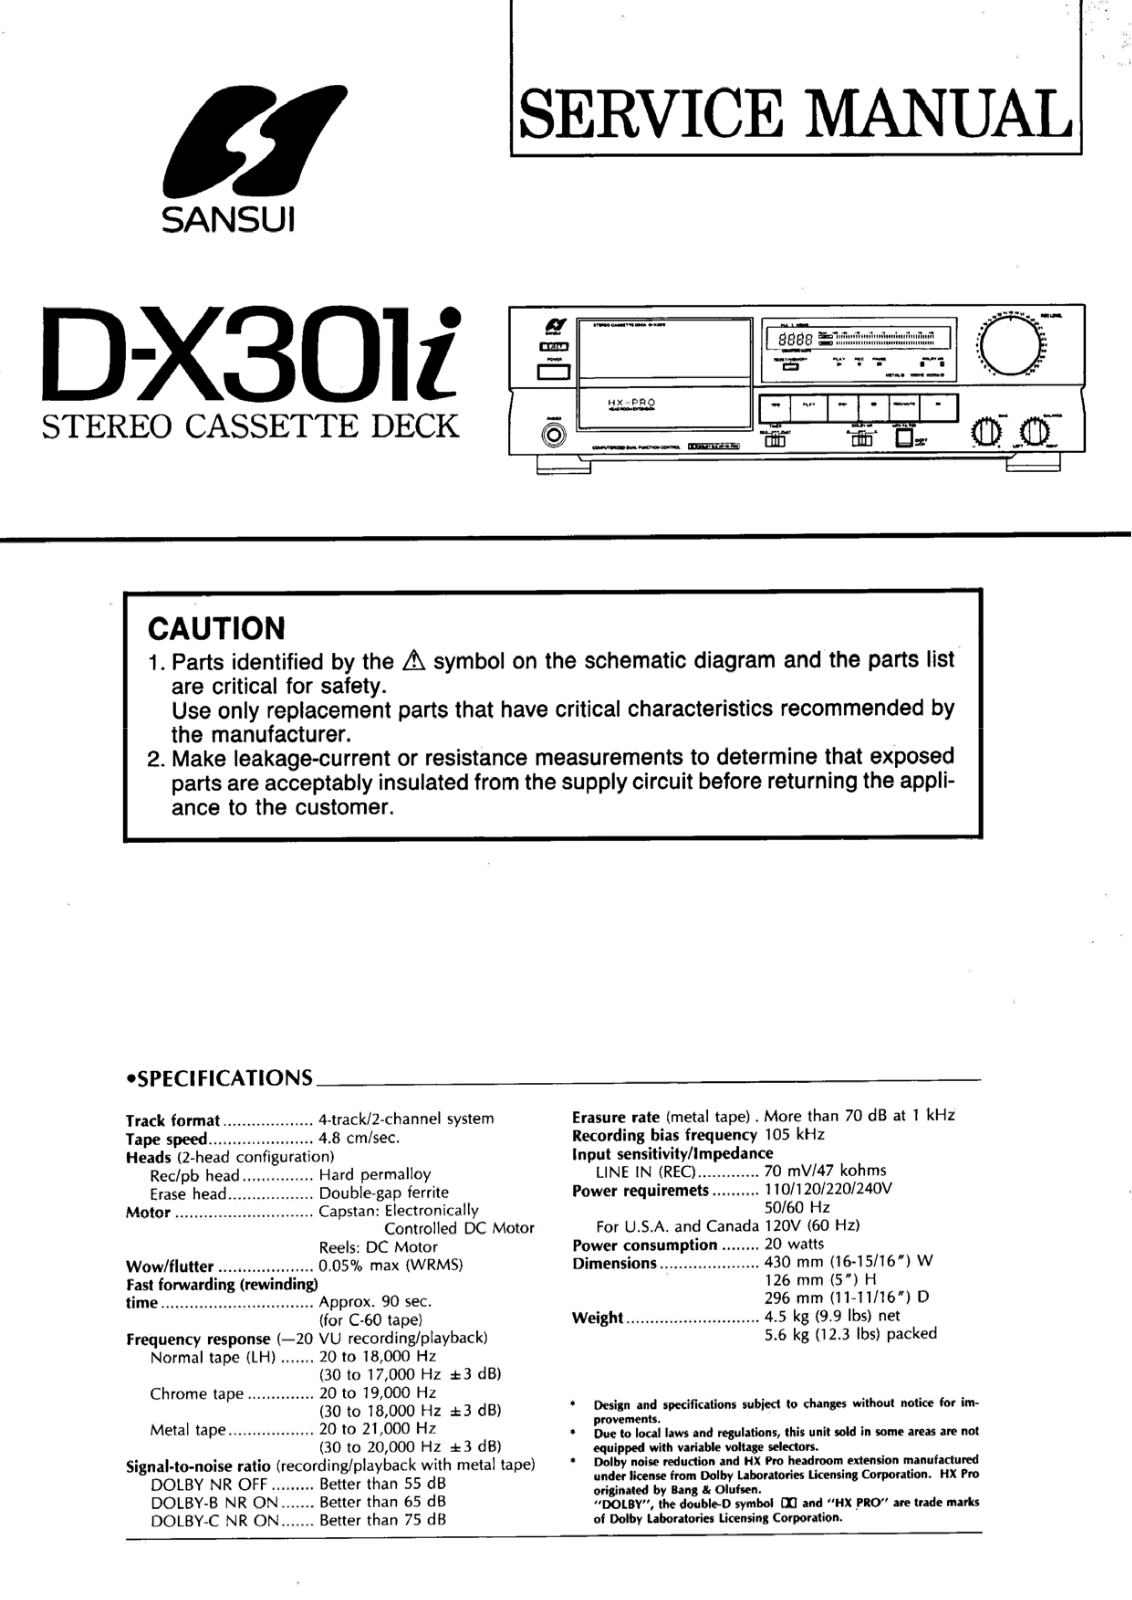 Sansui D-X301-i Service Manual